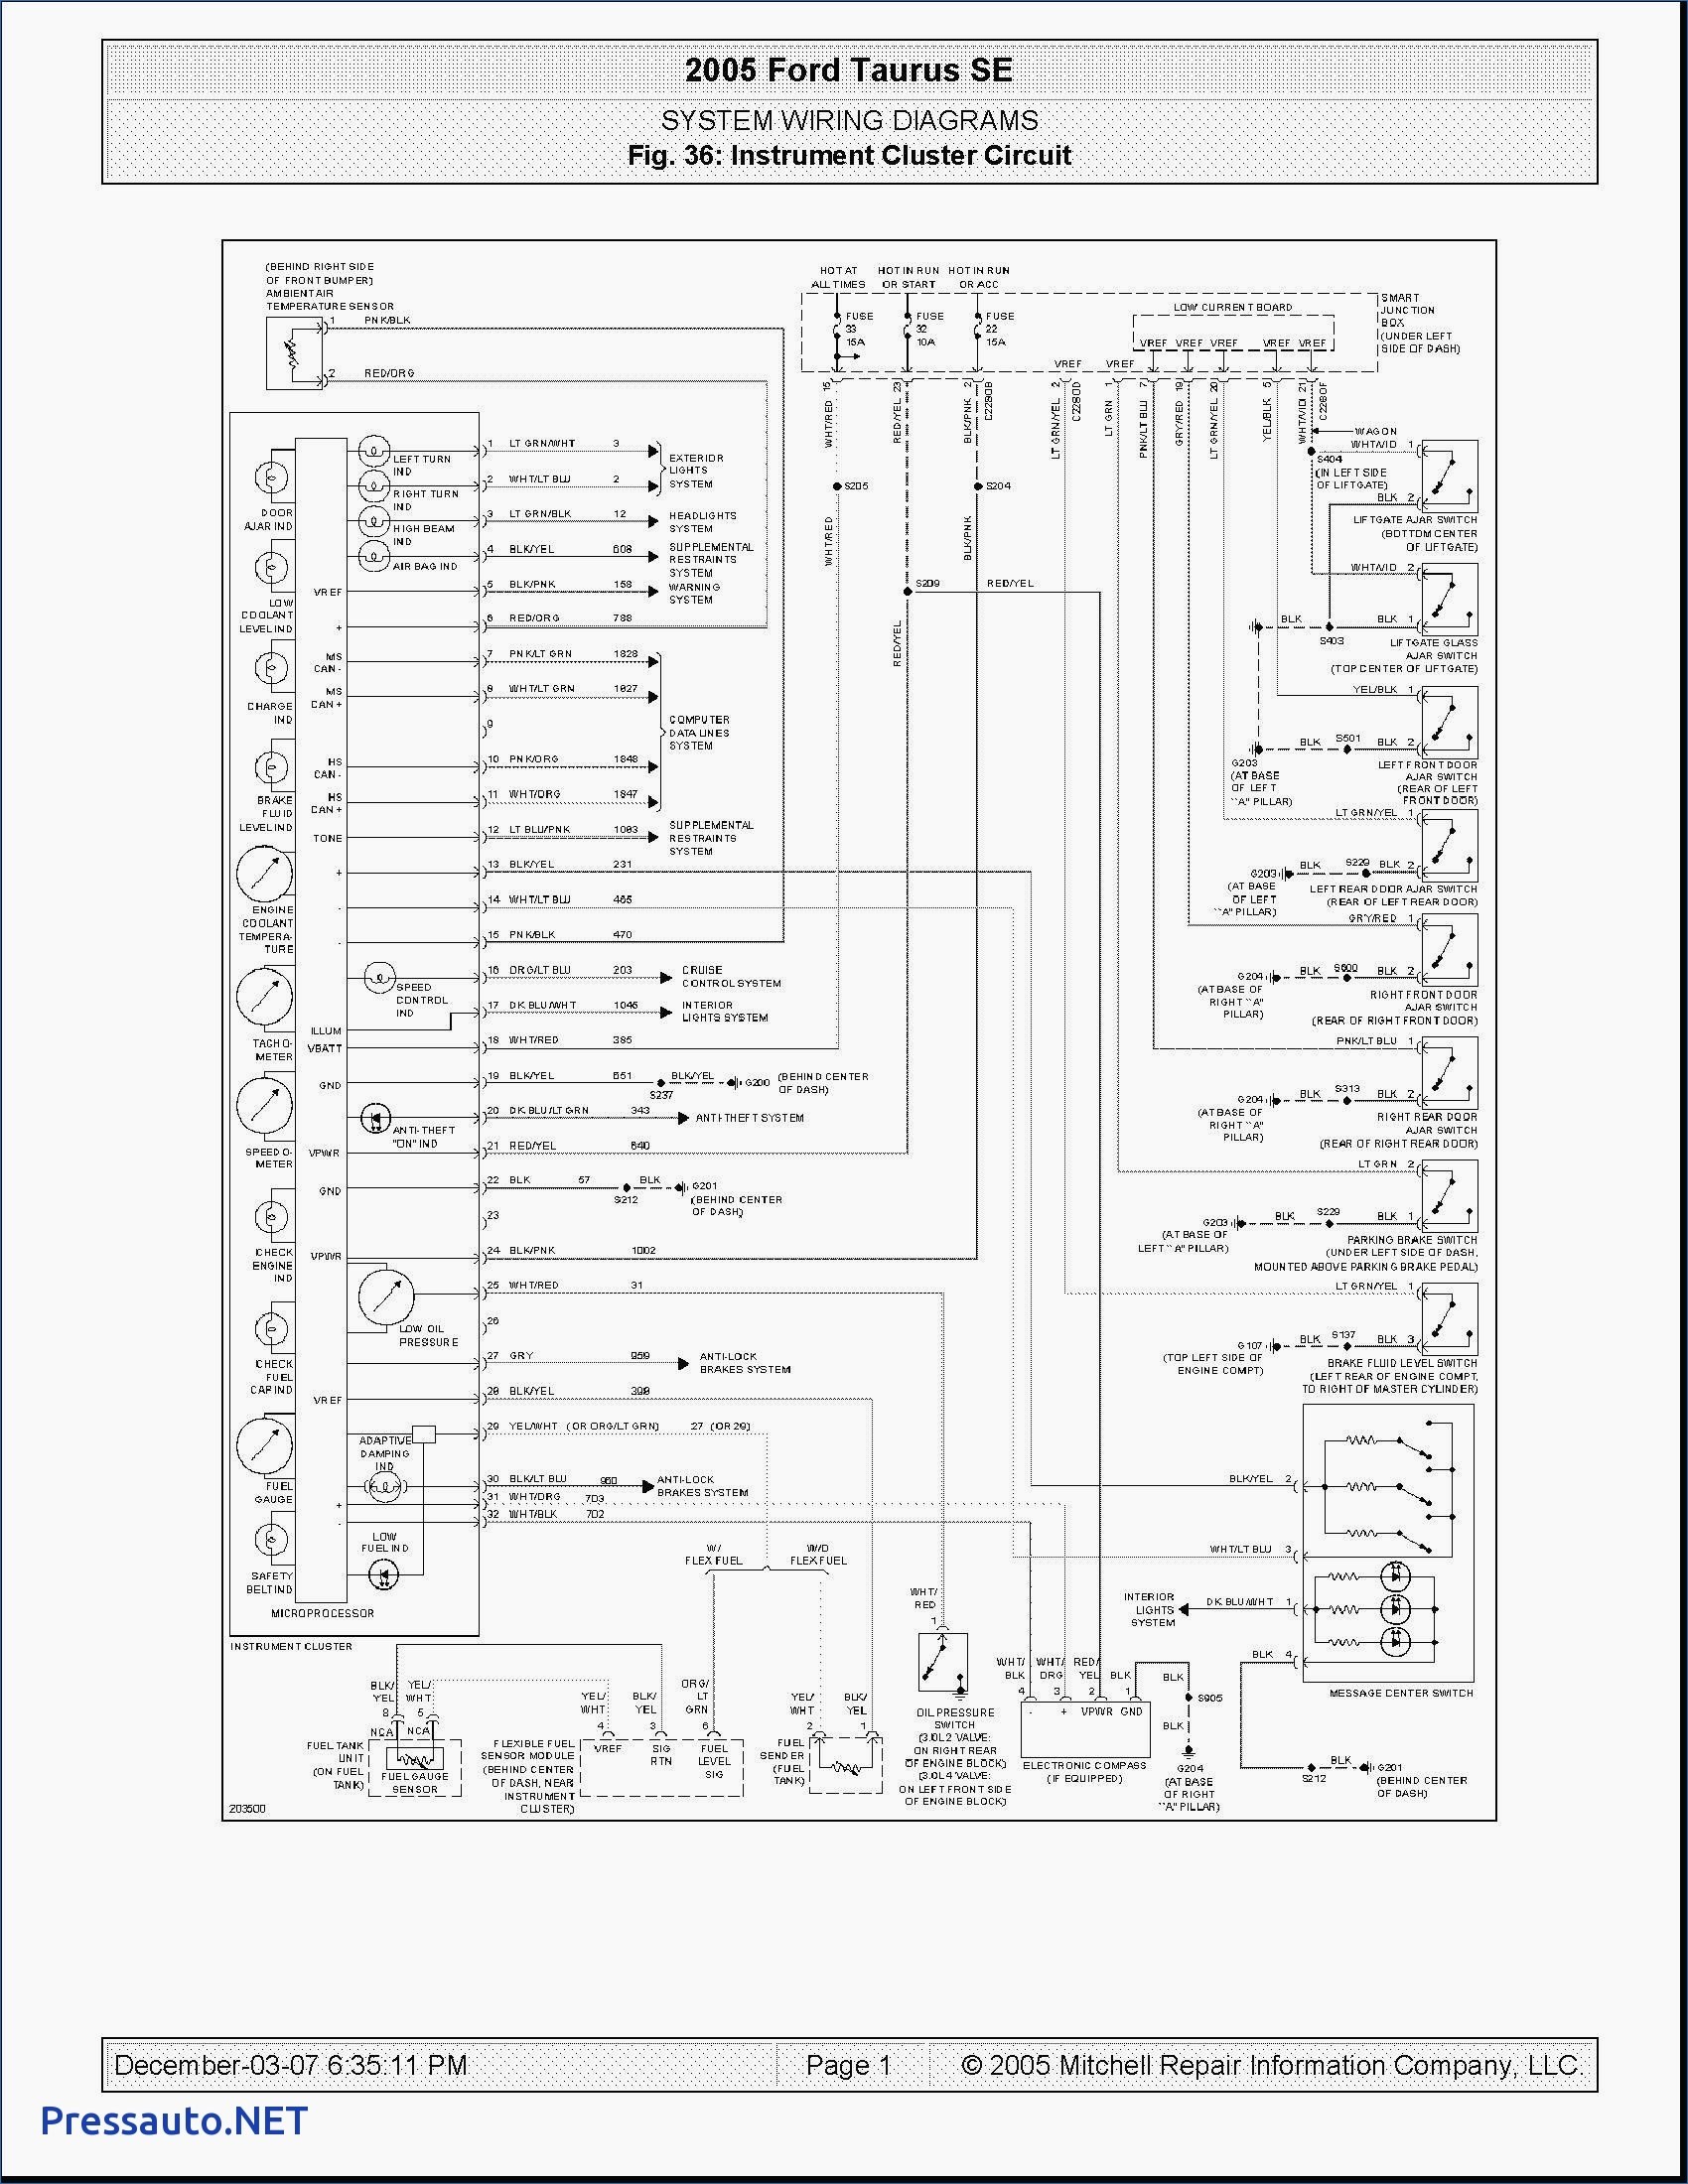 1996 ford Taurus Engine Diagram 05 ford Taurus Wiring Diagram Download Free Printable Throughout Of 1996 ford Taurus Engine Diagram